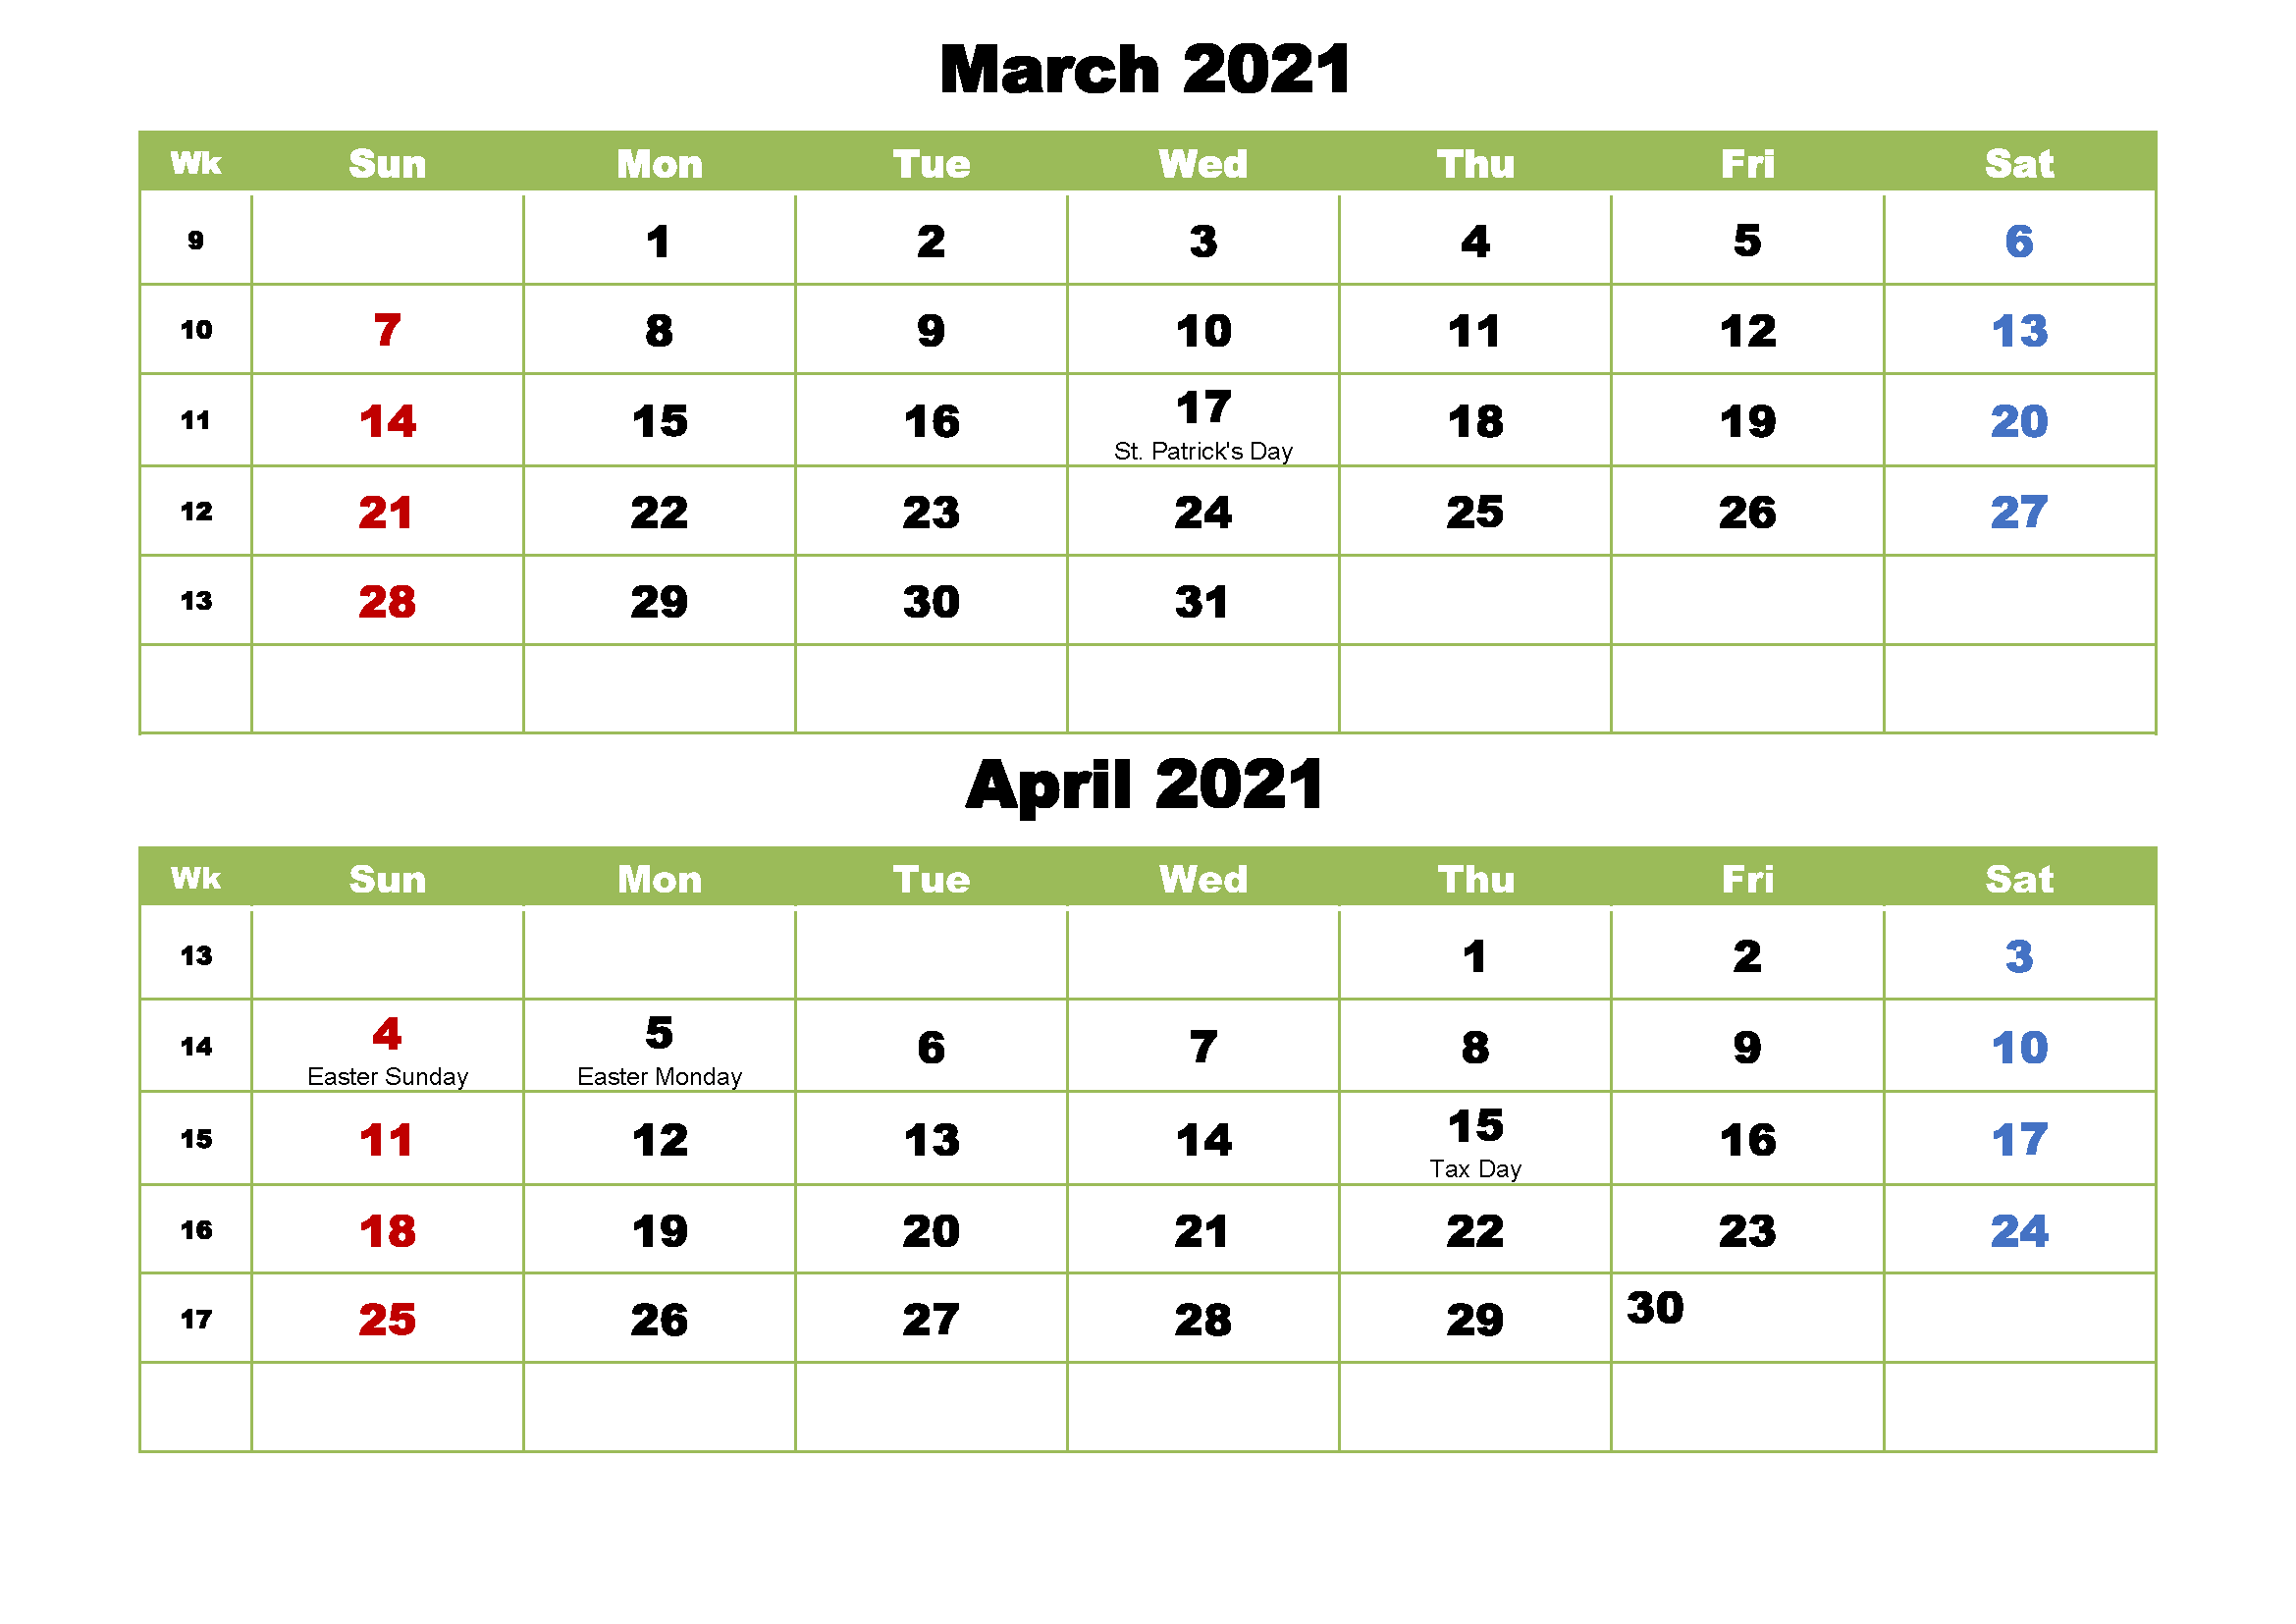 March April 2021 Holidays Calendar